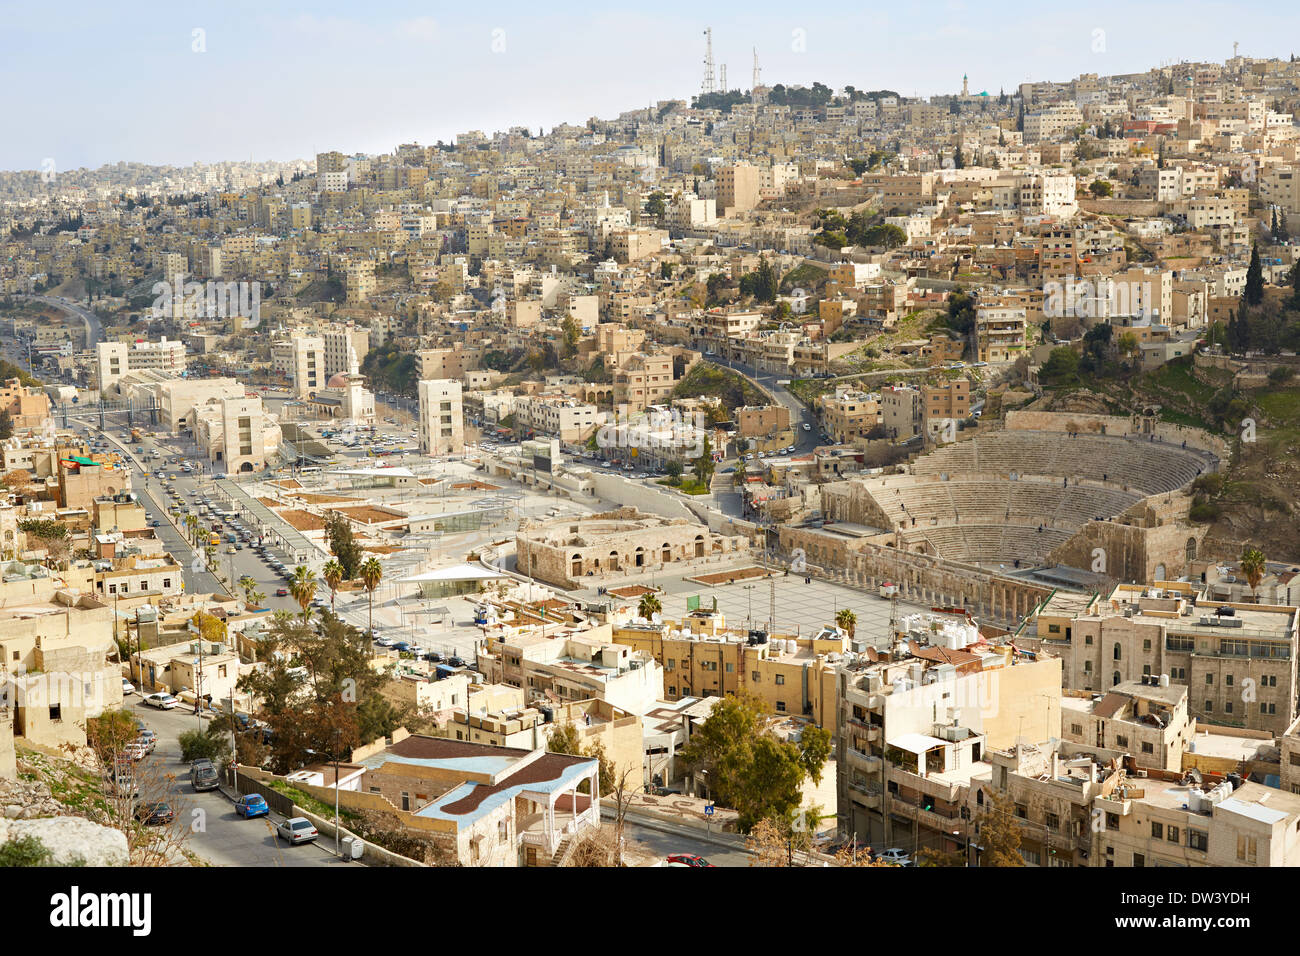 Roman theater and city view of Amman, Jordan Stock Photo